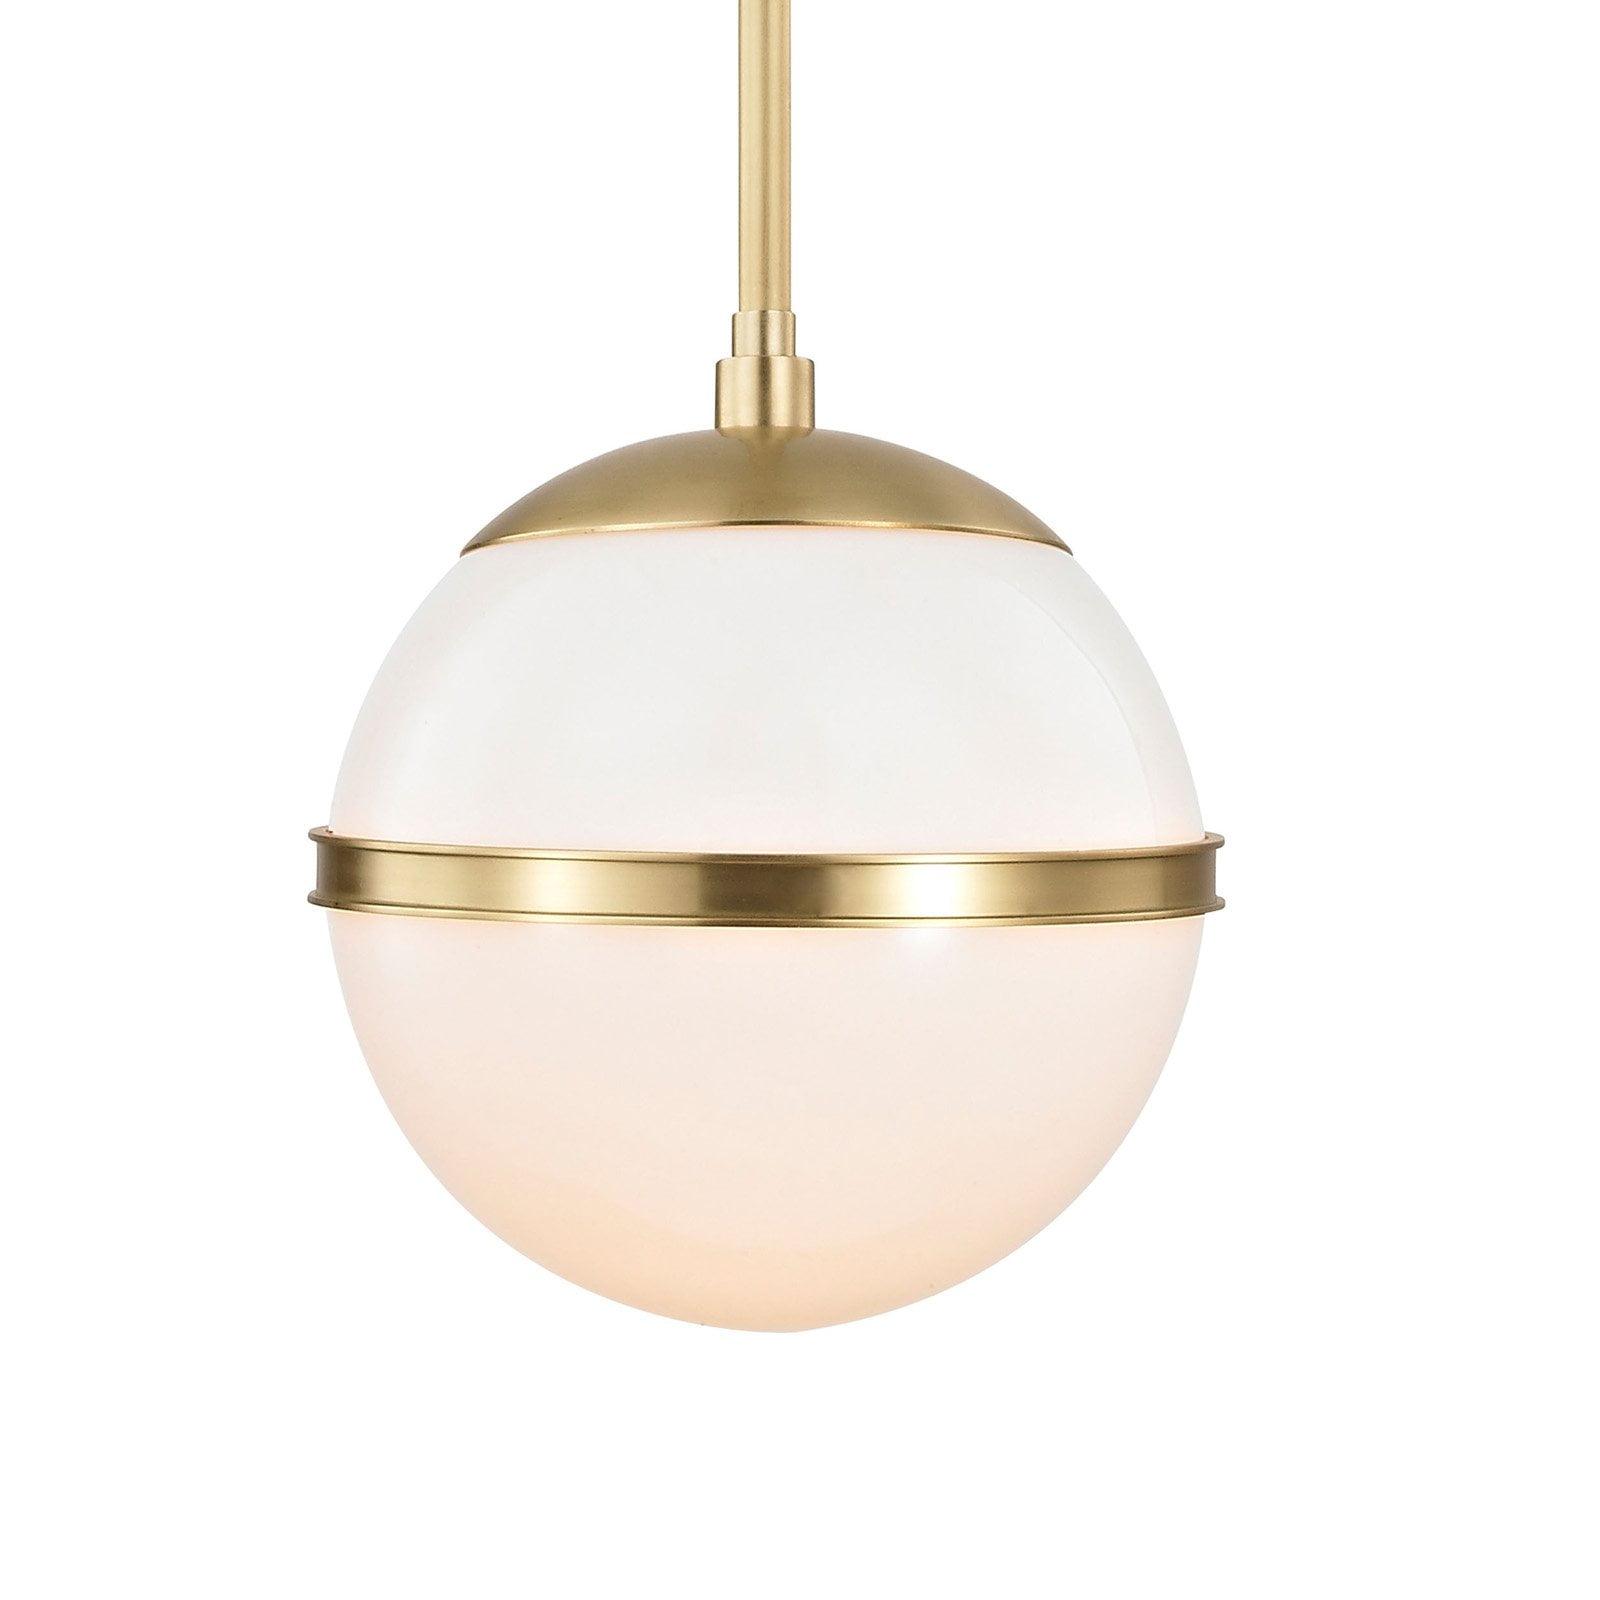 Mini Globe Aged Brass Pendant Light with White Glass Shade